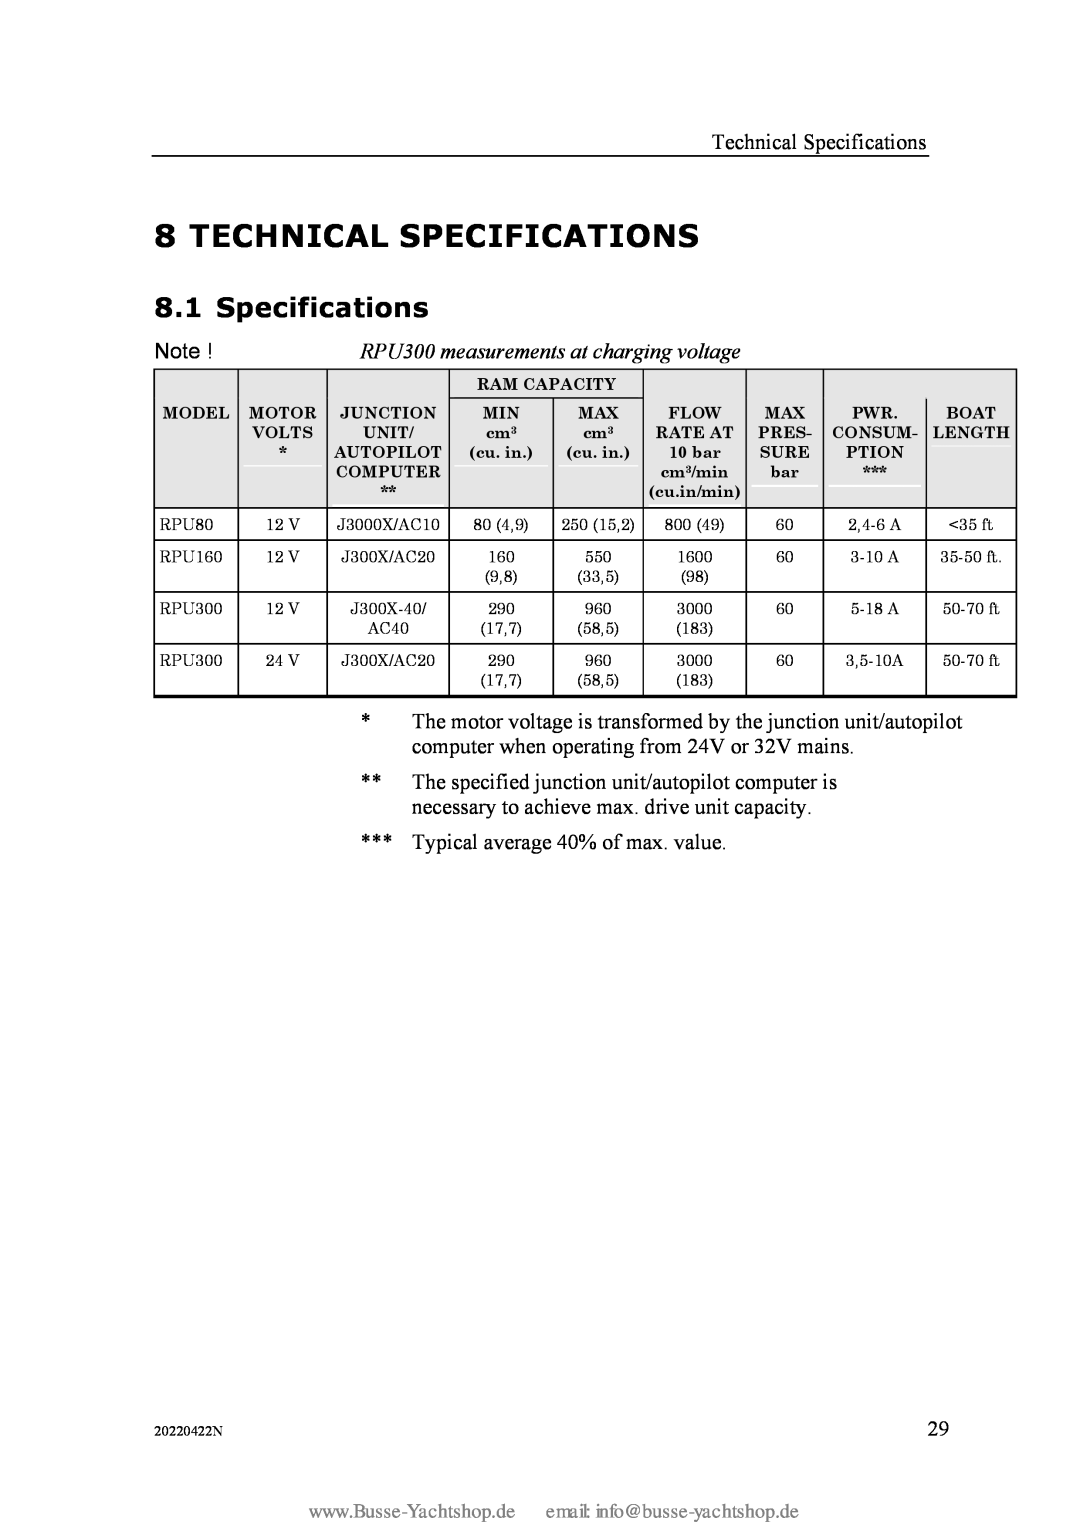 Simran RPU80 instruction manual Technical Specifications 